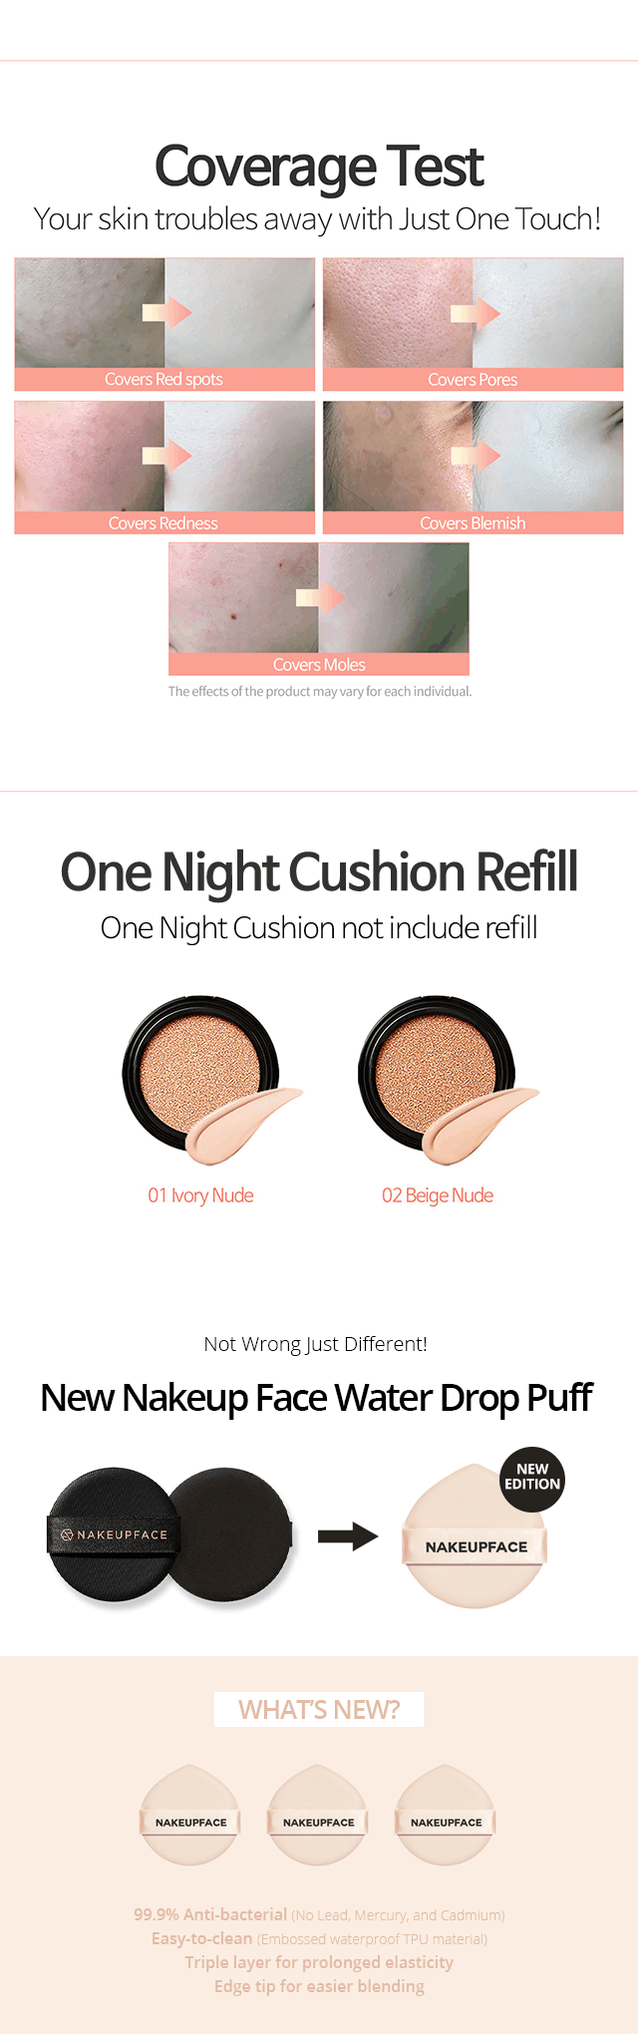 Brand: NAKEUPFACE - One Night Cushion